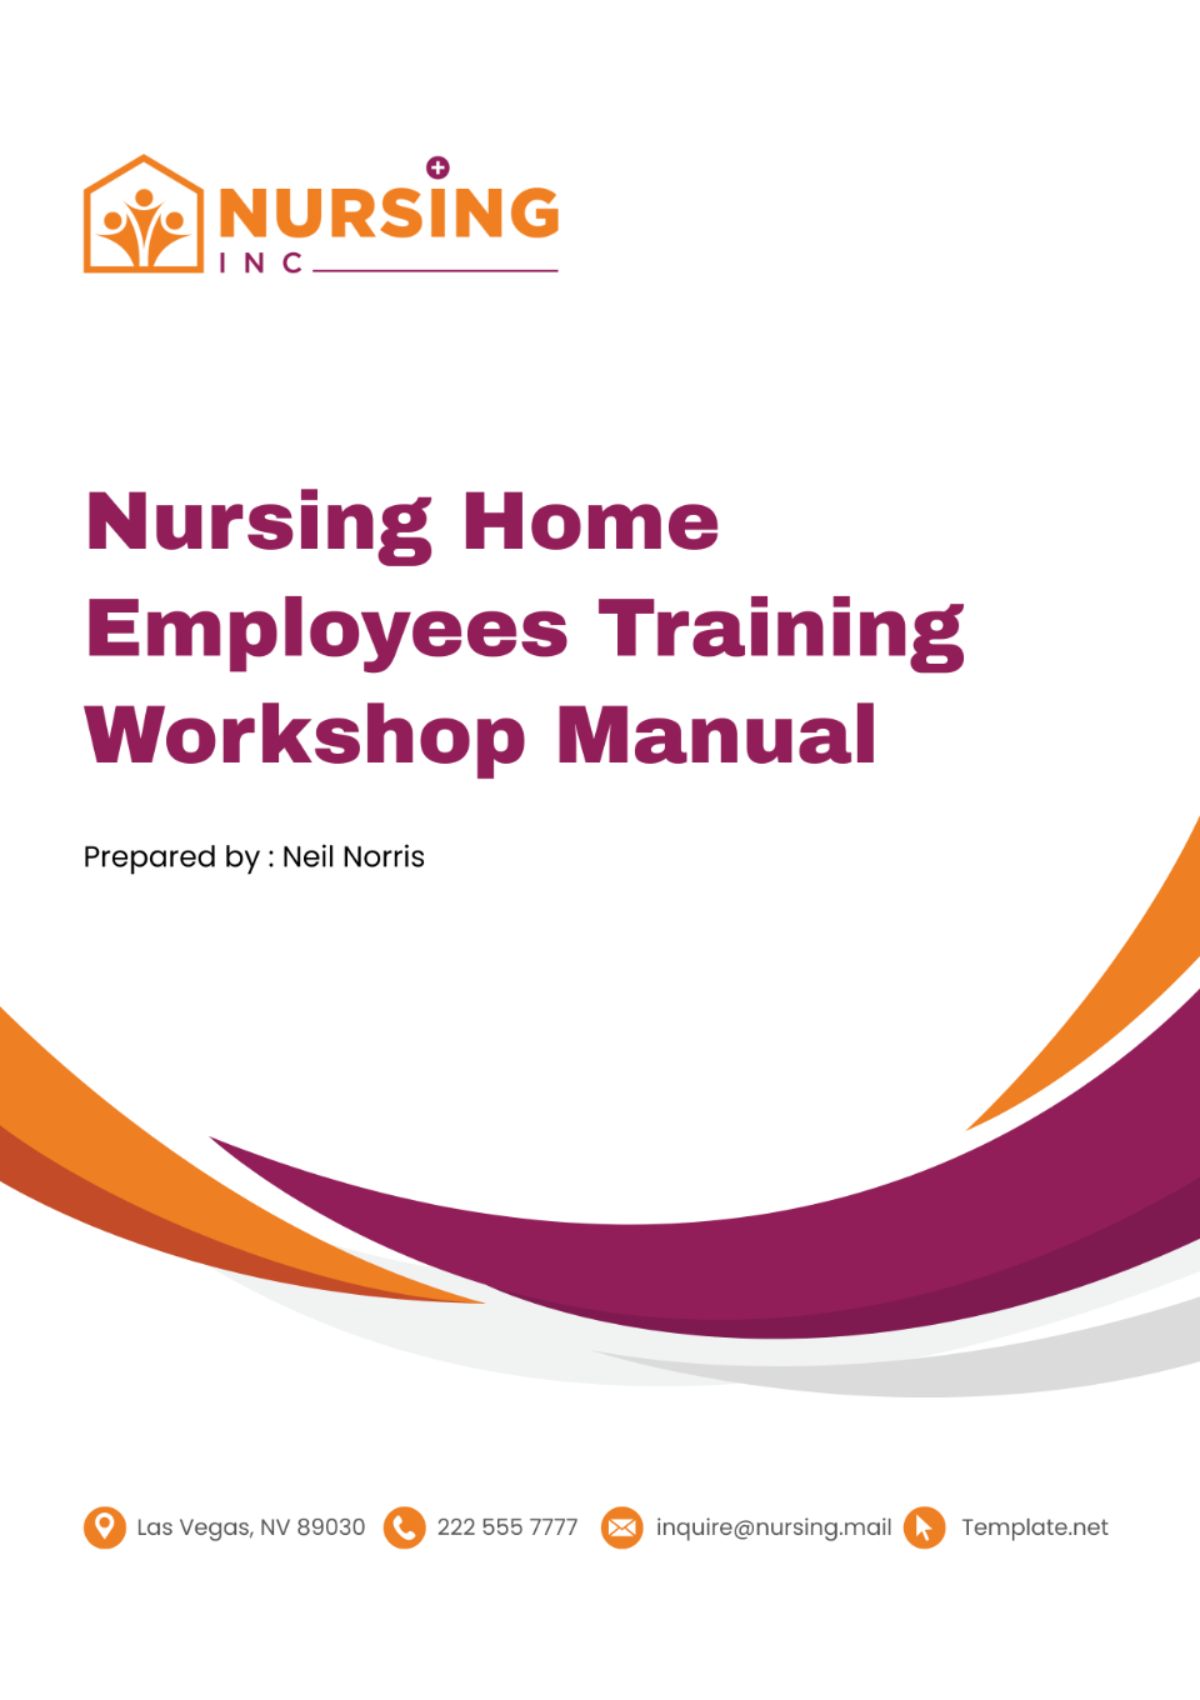 Nursing Home Employees Training Workshop Manual Template